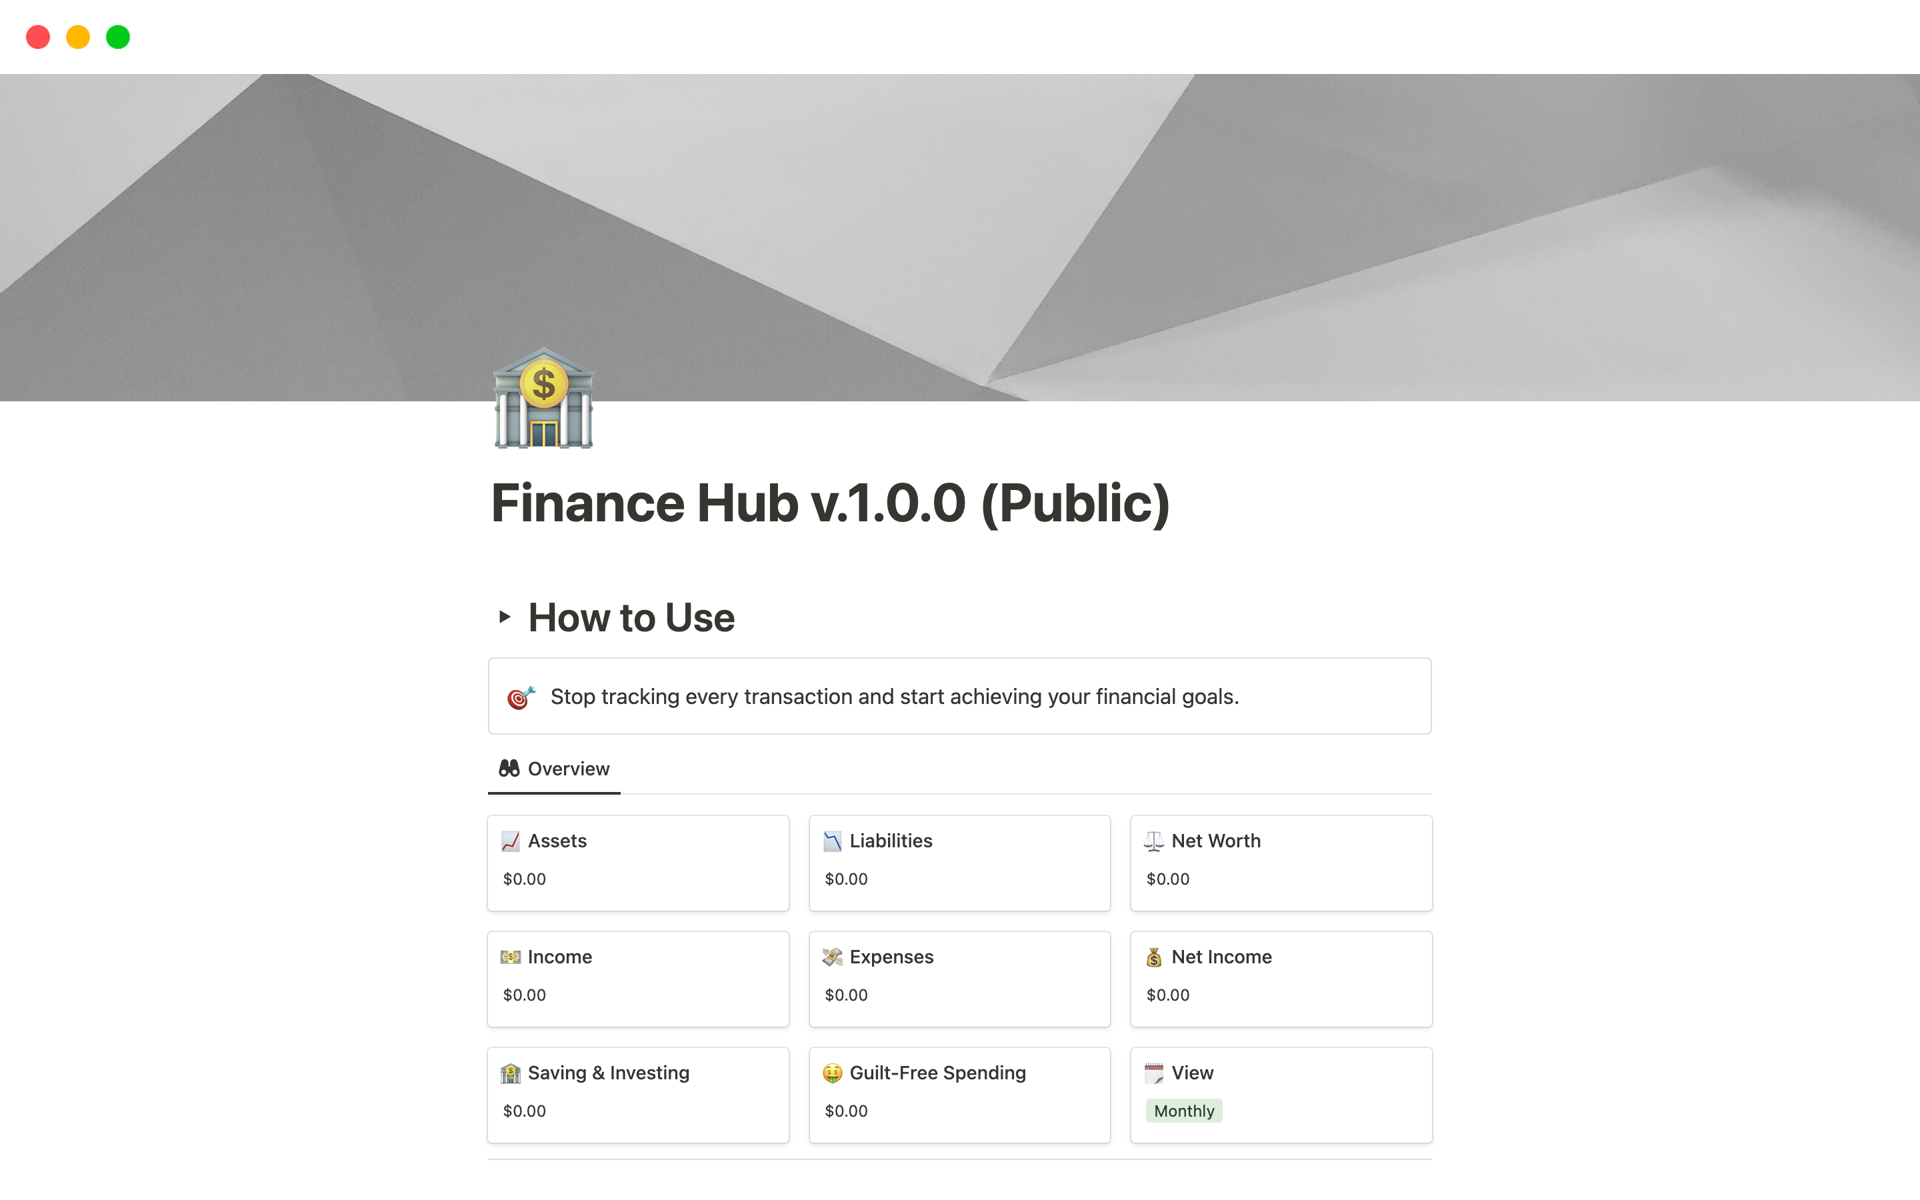 Aperçu du modèle de Finance Hub v.1.0.0 (Public)